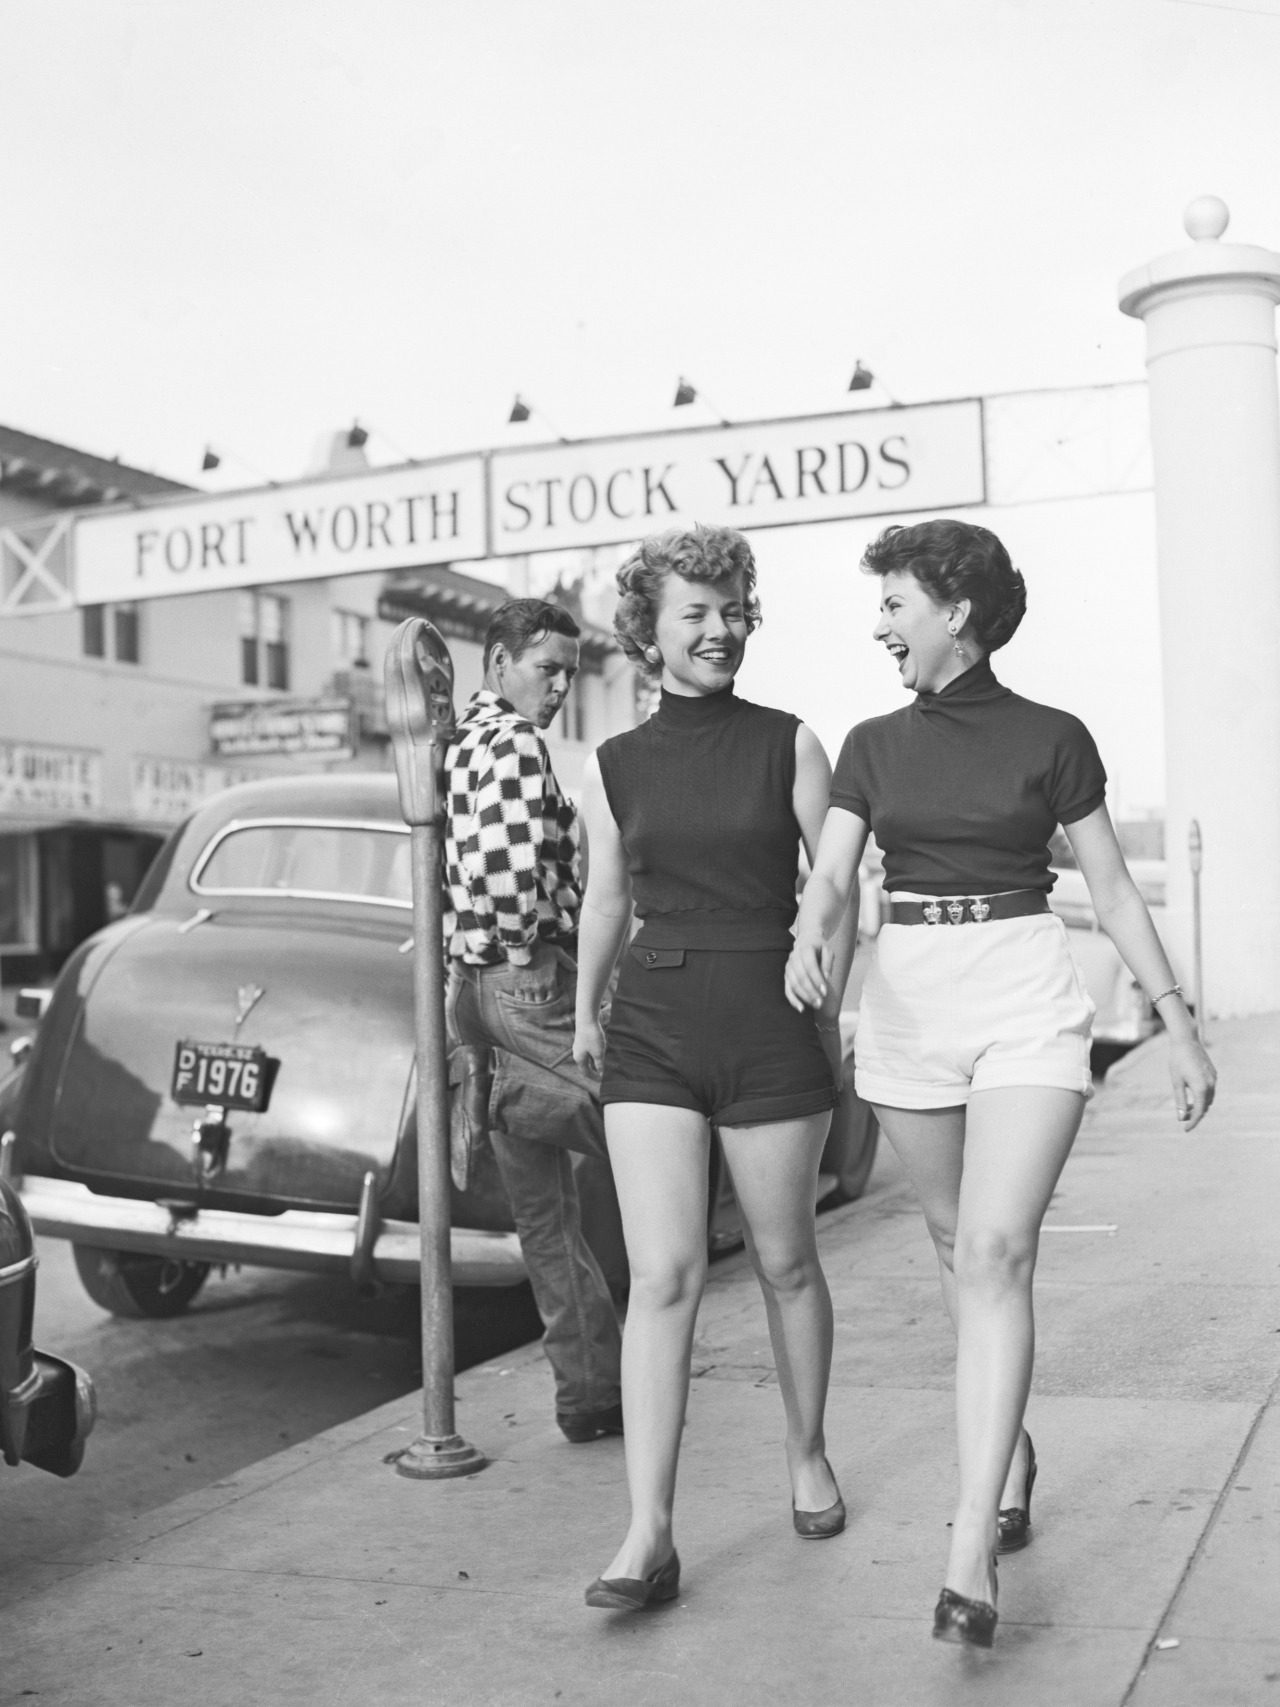 Mini Shorts In Public, Fort Worth, Texas 1952